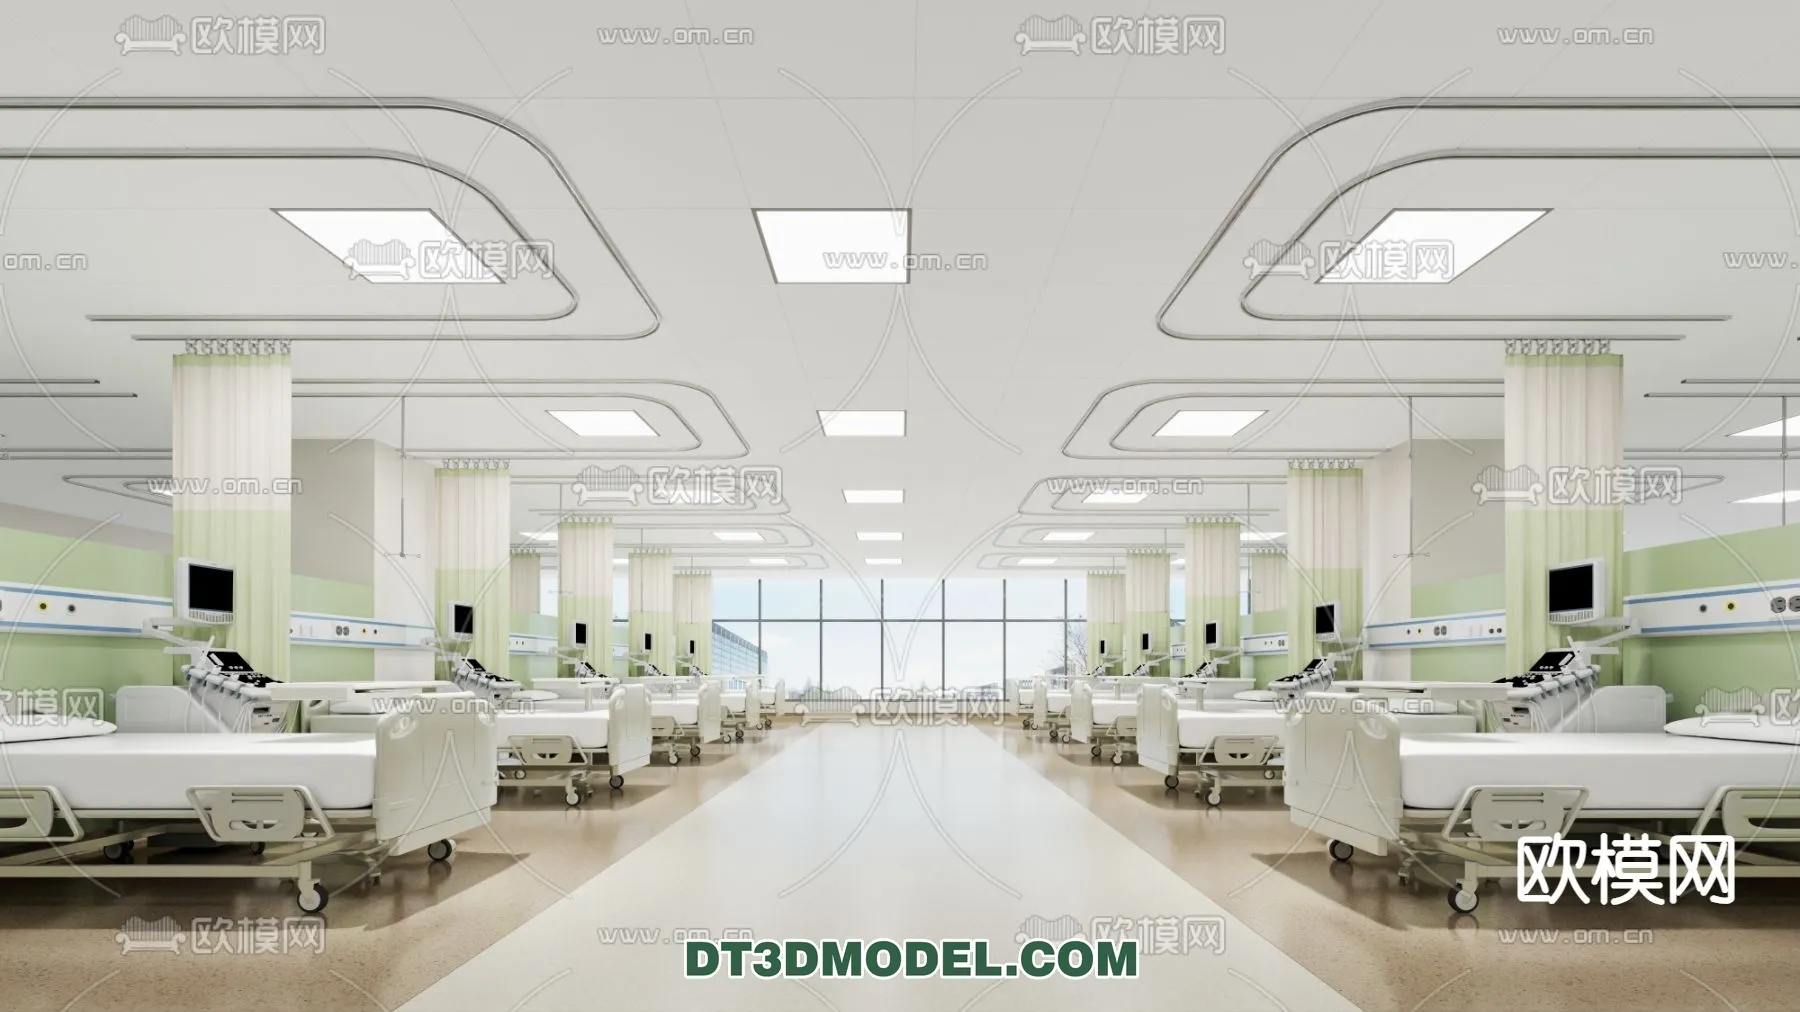 HOSPITAL 3D SCENES – MODERN – 0133